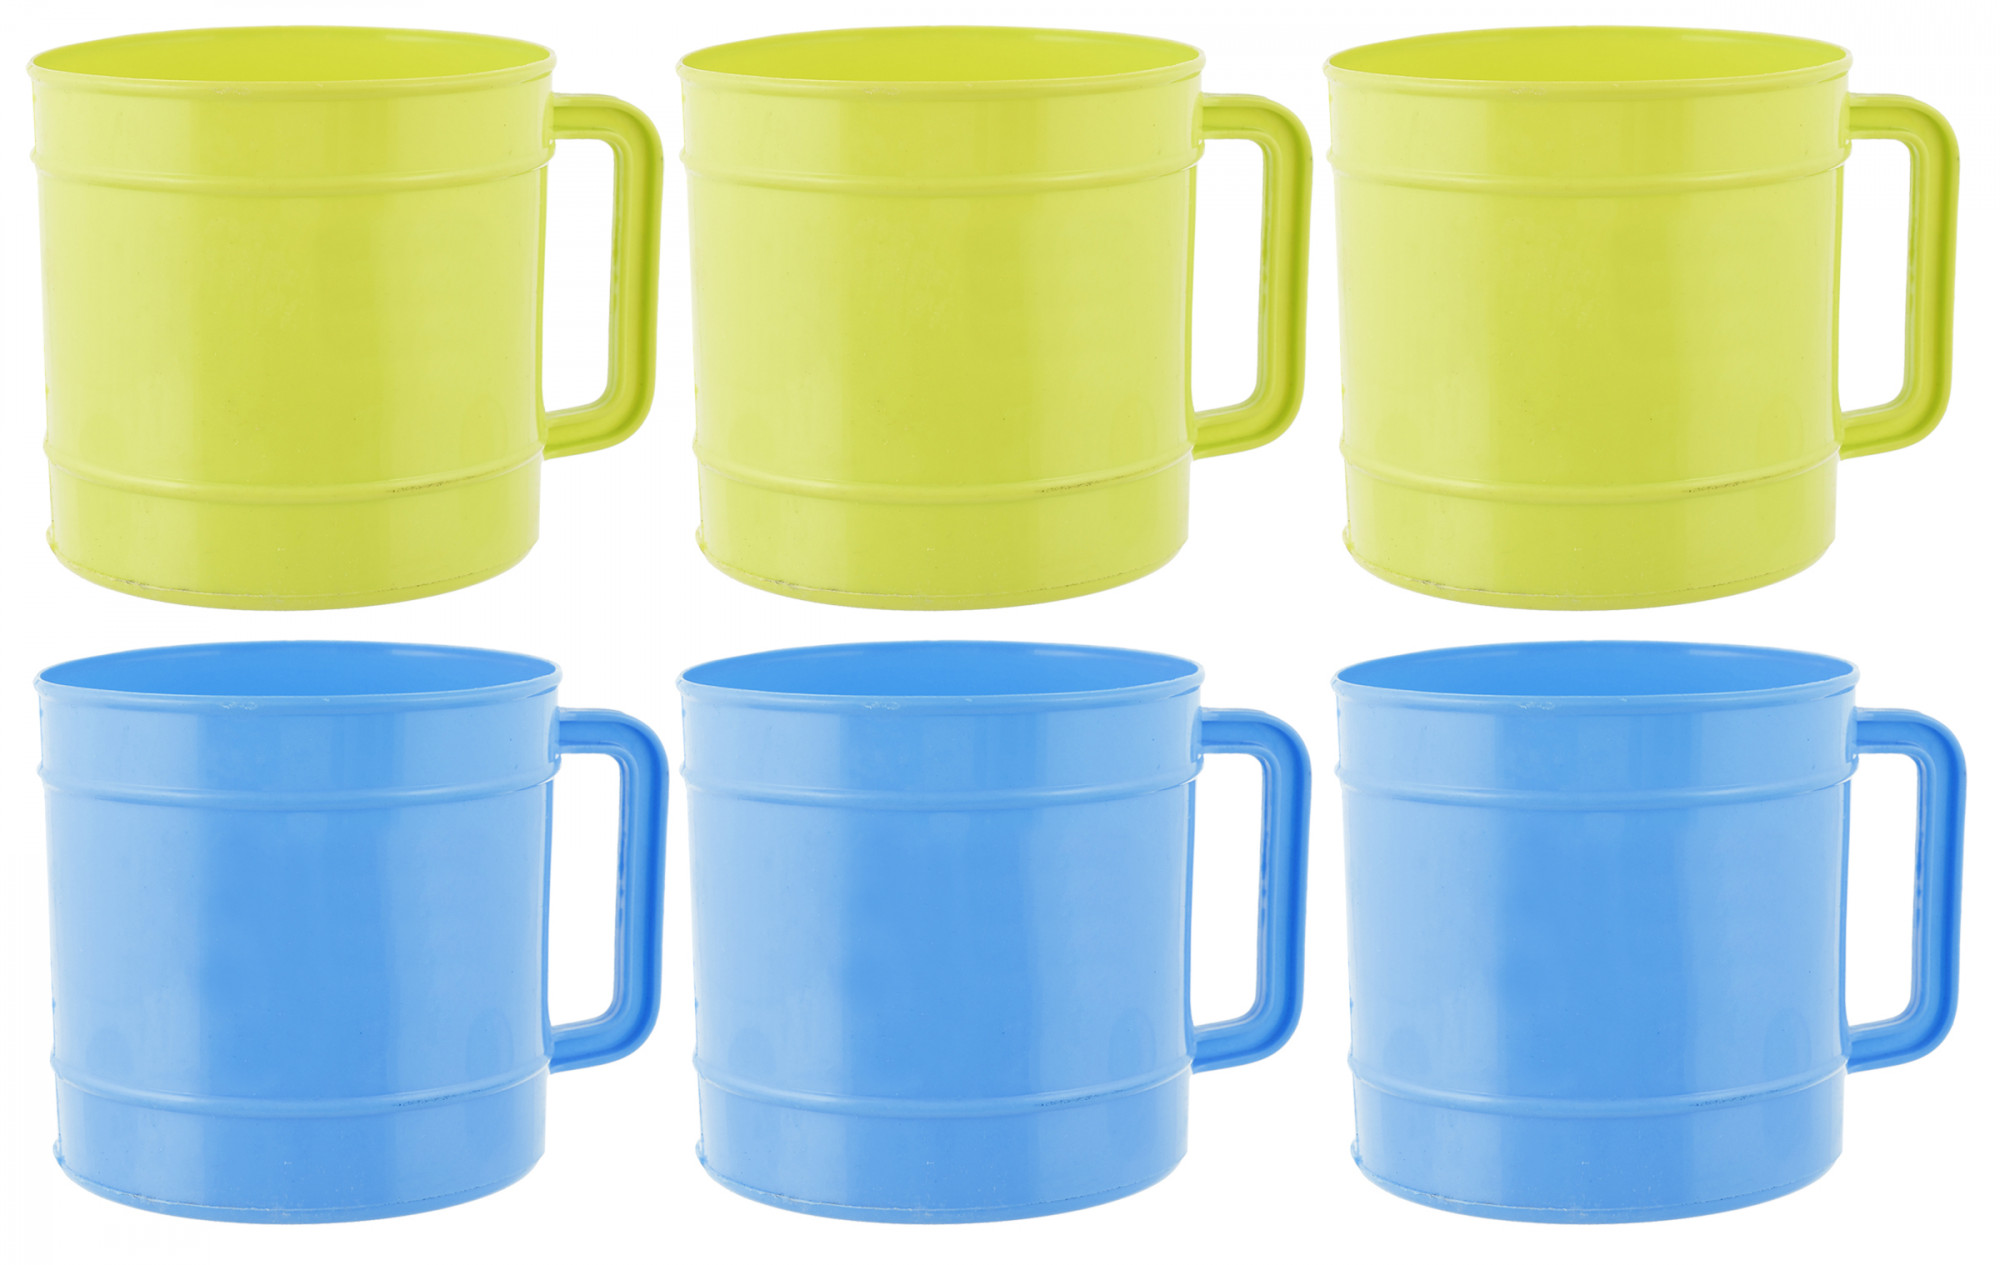 Kuber Industries Plastic Bathroom Mug, 1 Ltr., Pack of 6 (Green & Blue)